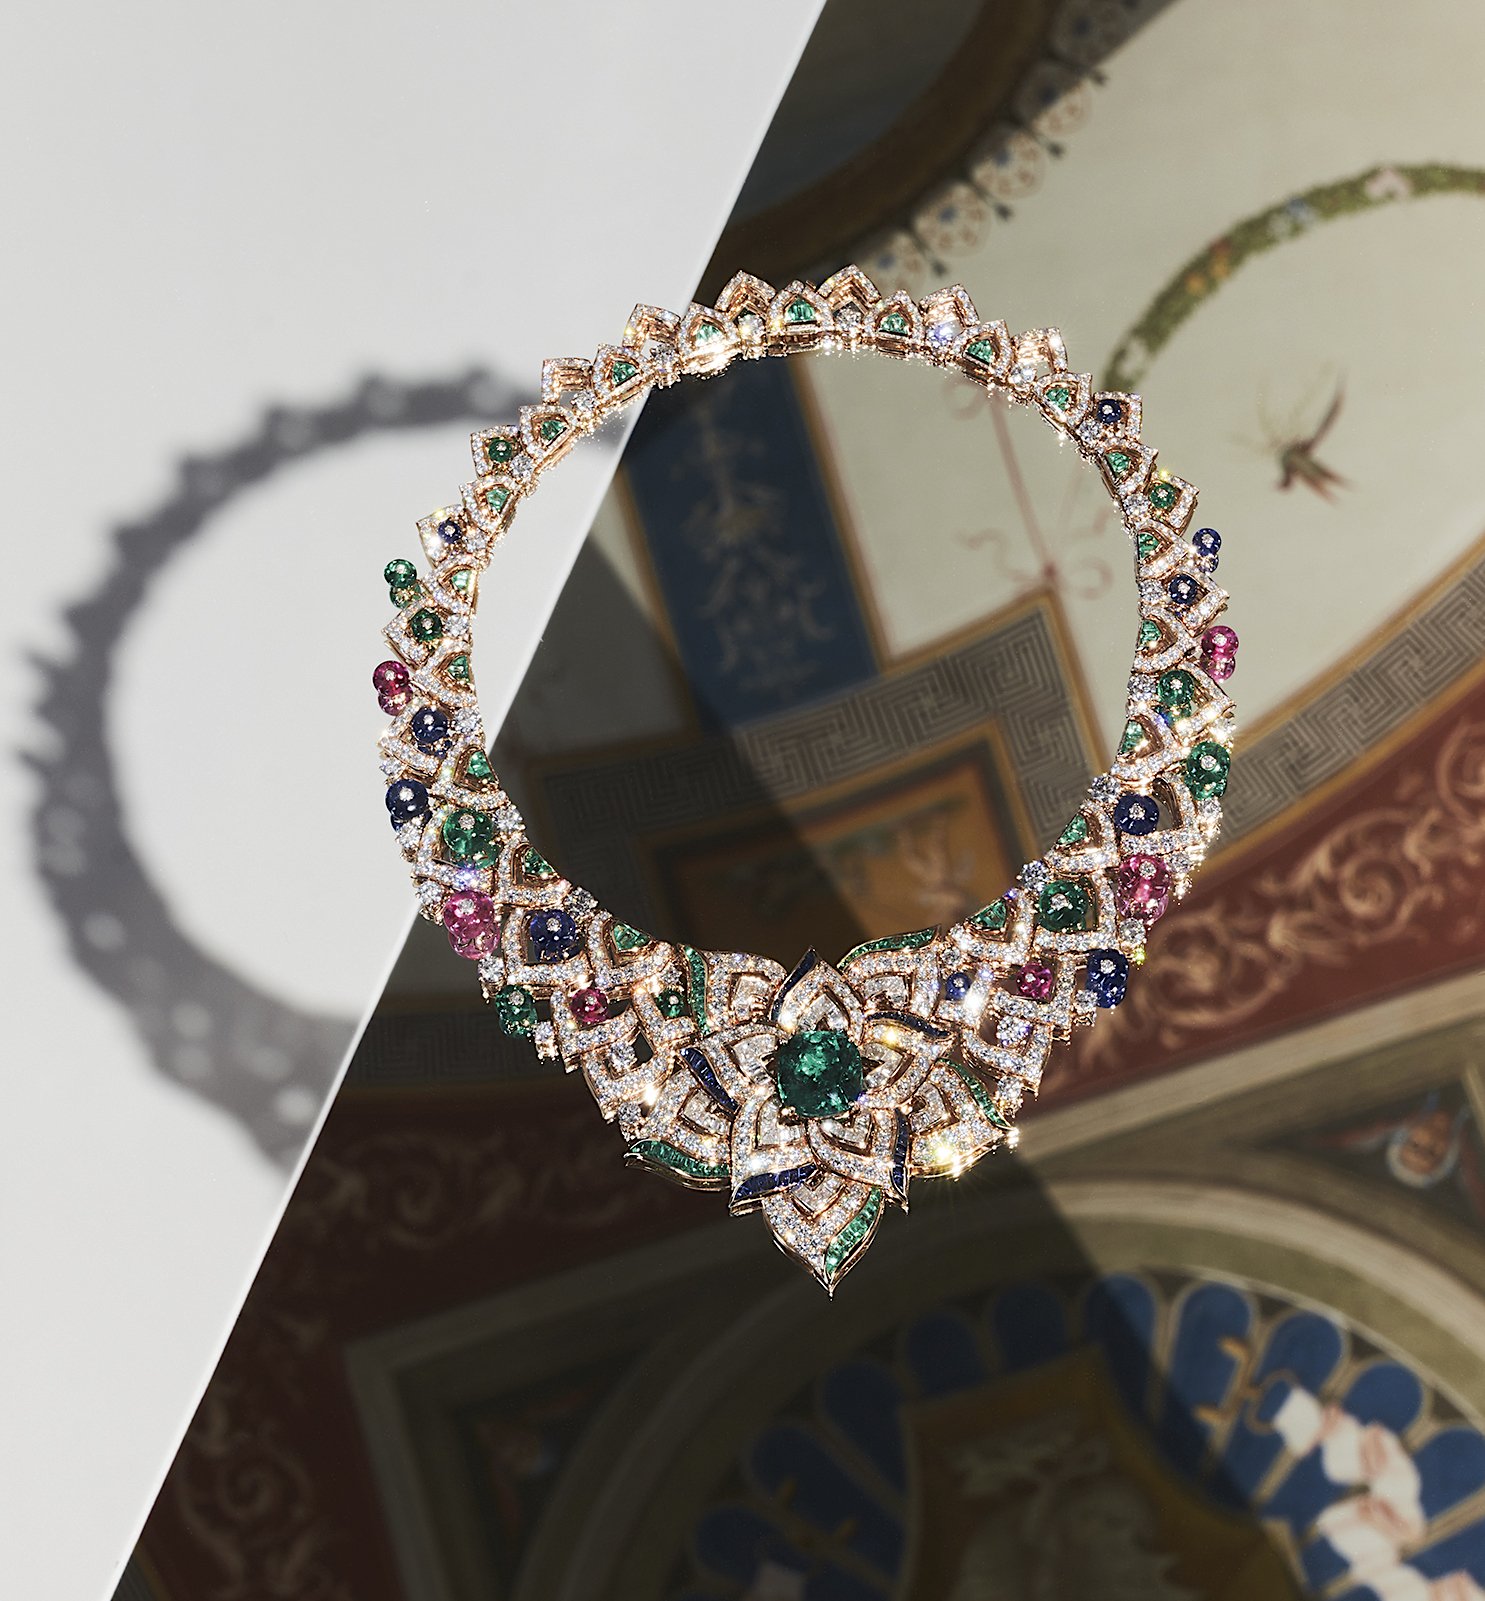 Bulgari's High Jewellery Homage to the Mediterranean